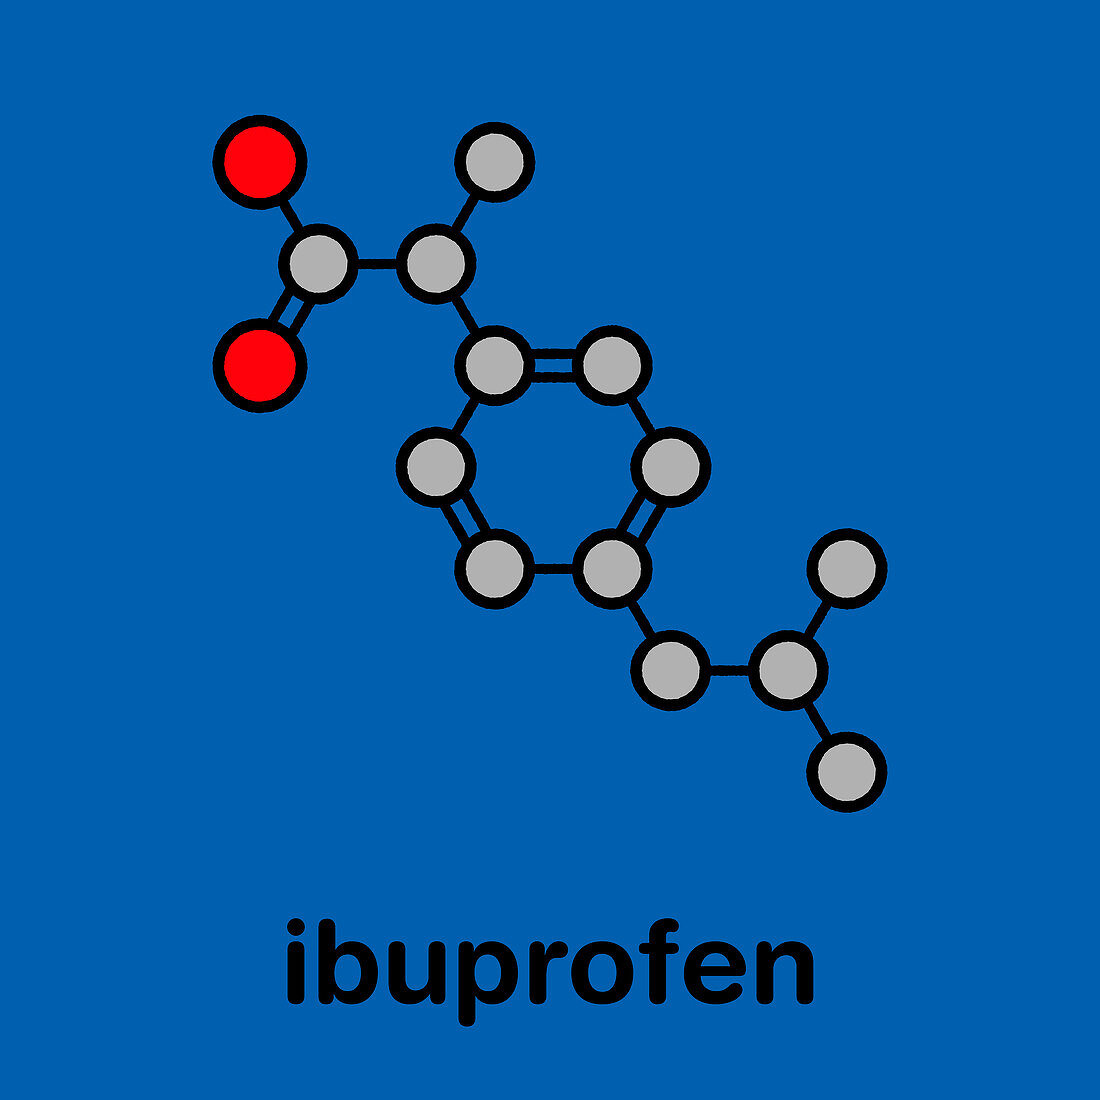 Ibuprofen pain and inflammation drug, molecular model